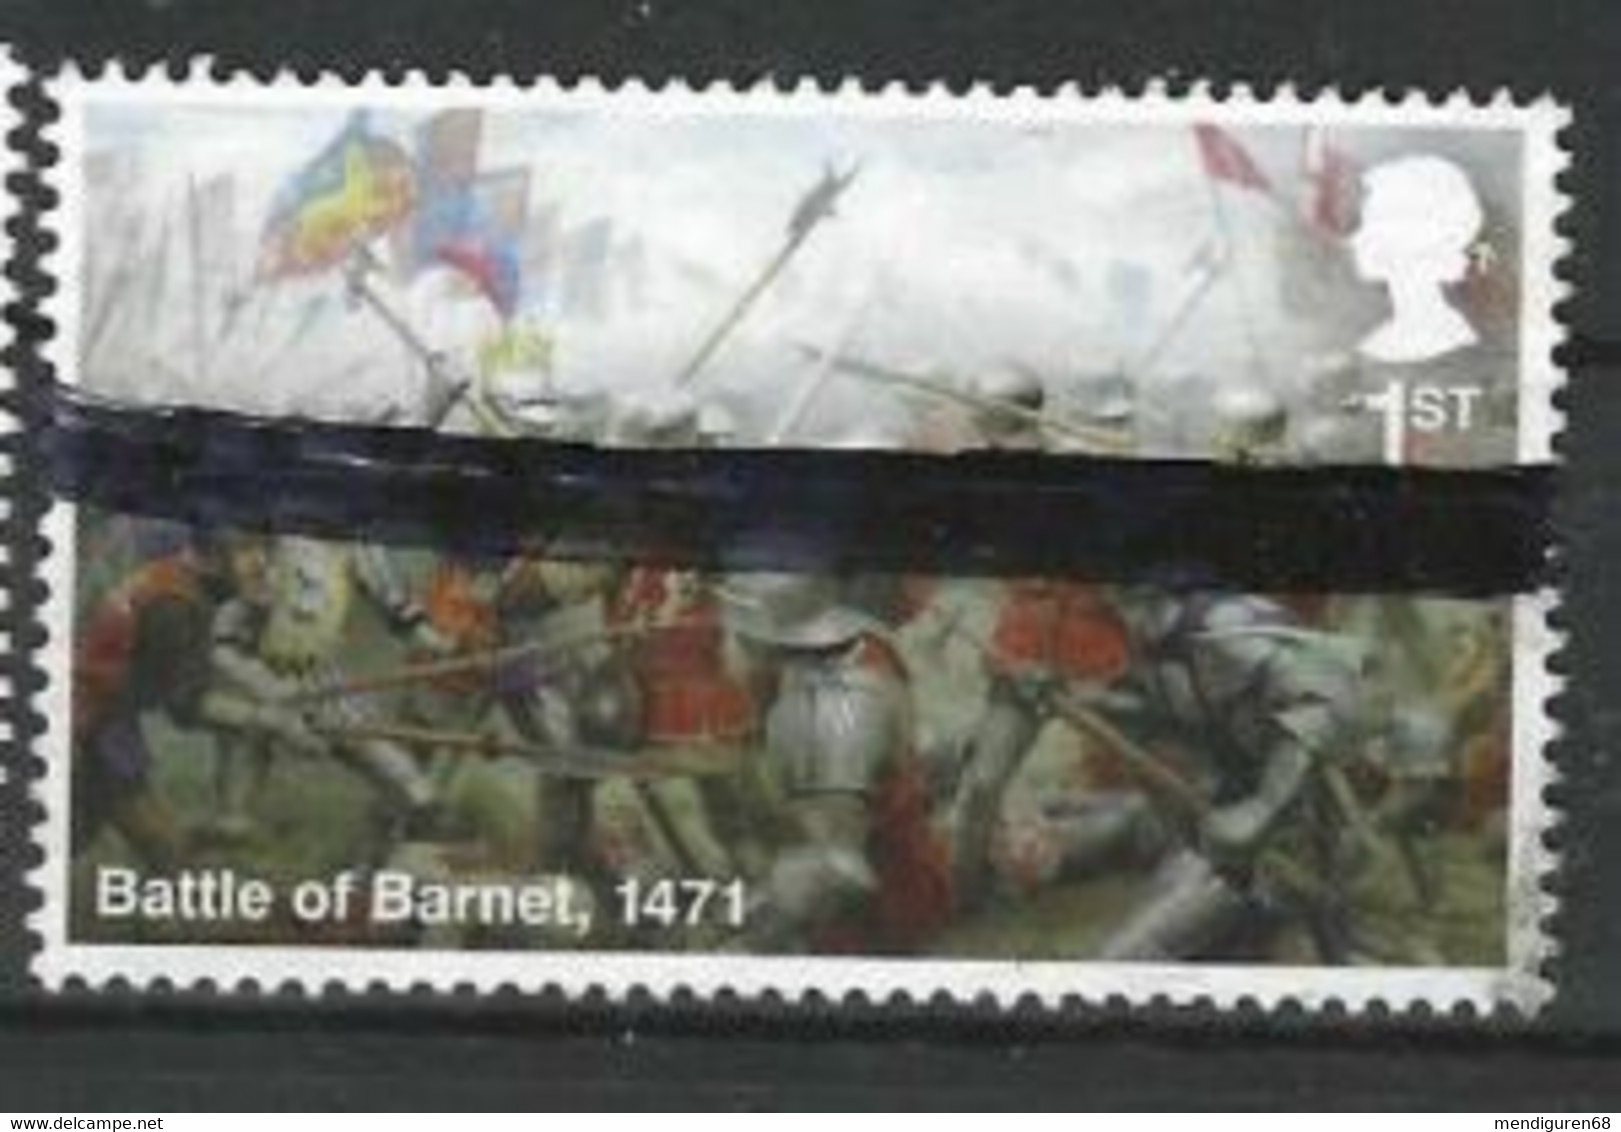 GROSSBRITANNIEN GRANDE BRETAGNE GB 2021 THE WARS OF THE ROSES: Battle Of BARNE 1471 USED SG 451 MI 4761 YT 5175 SC 4101 - Used Stamps